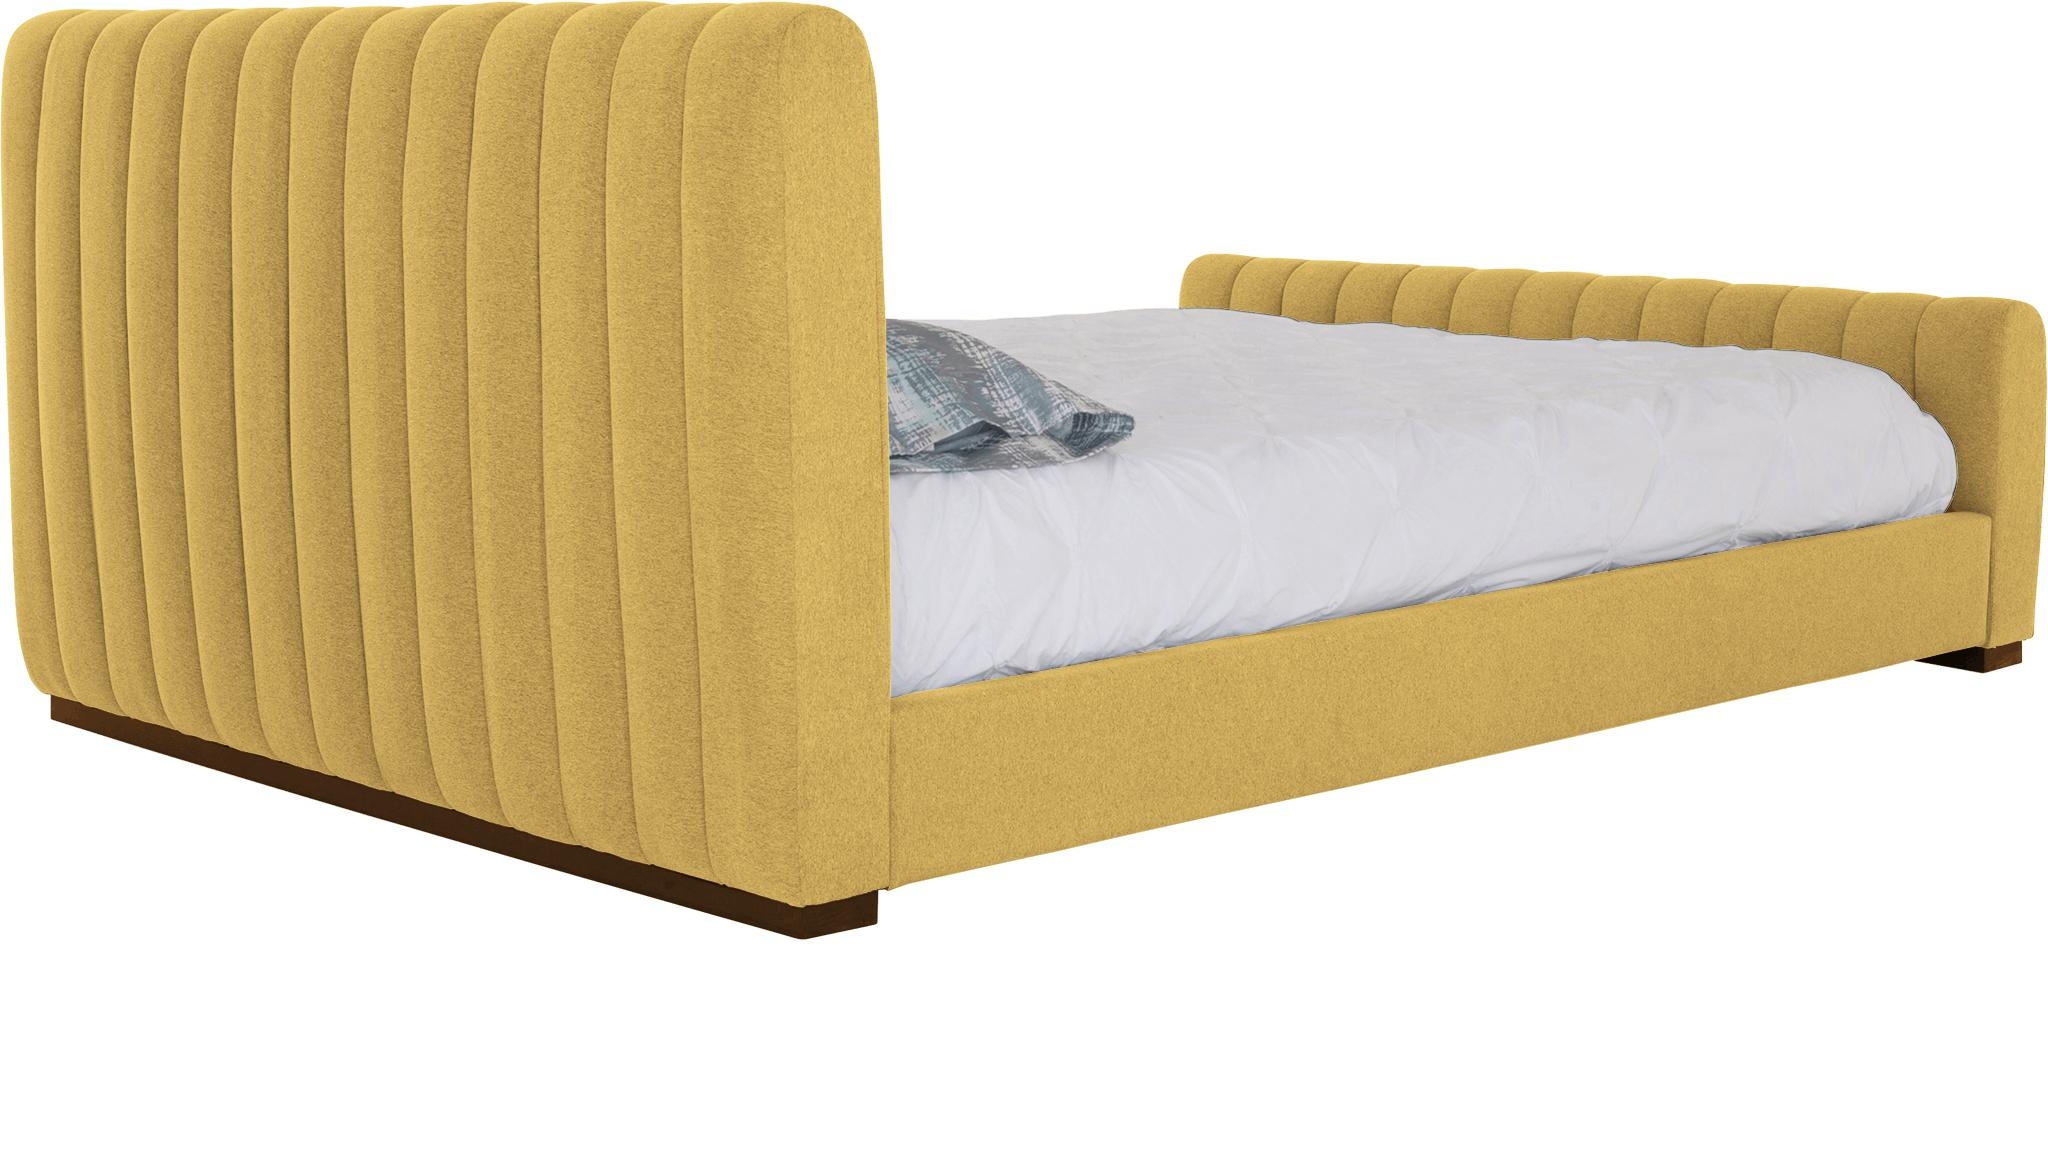 Yellow Camille Mid Century Modern Bed - Bentley Daisey - Mocha - Queen - Image 3